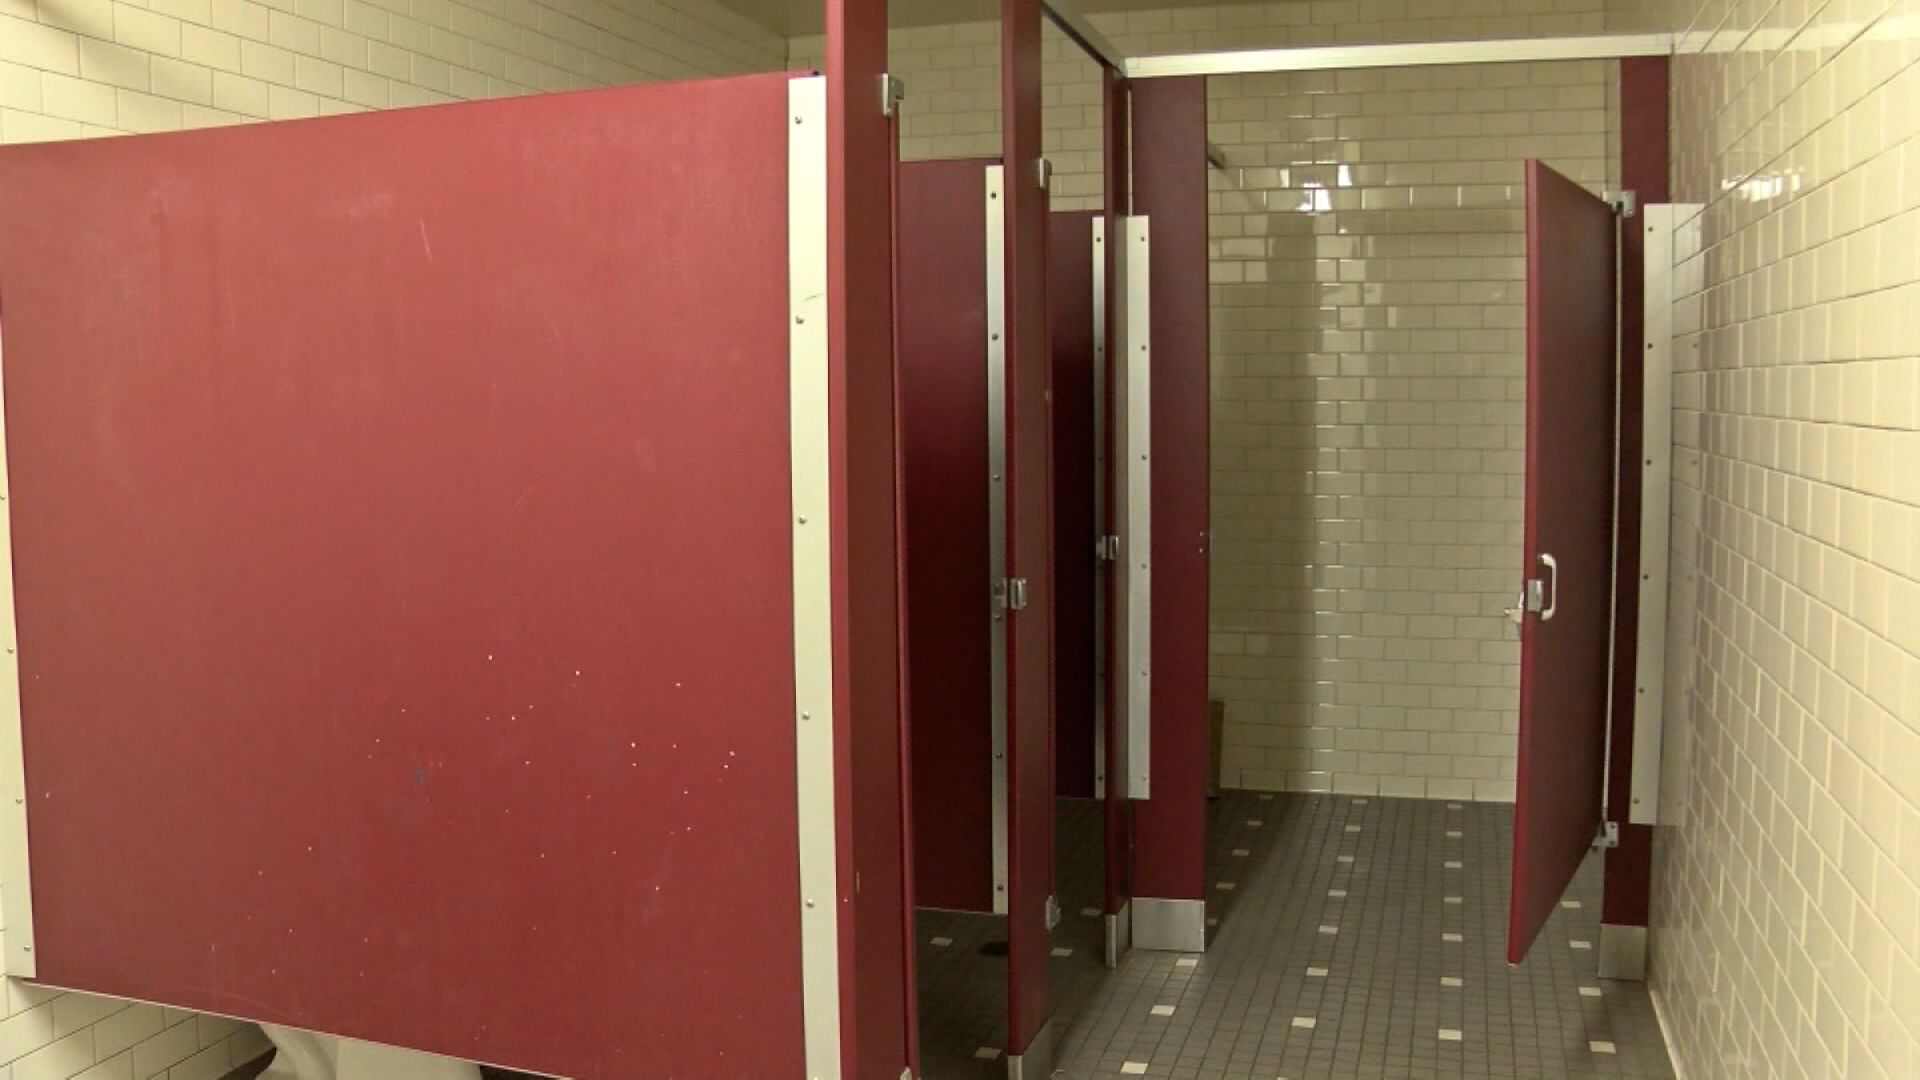 Devious licks' TikTok challenge leaves destroyed school bathrooms